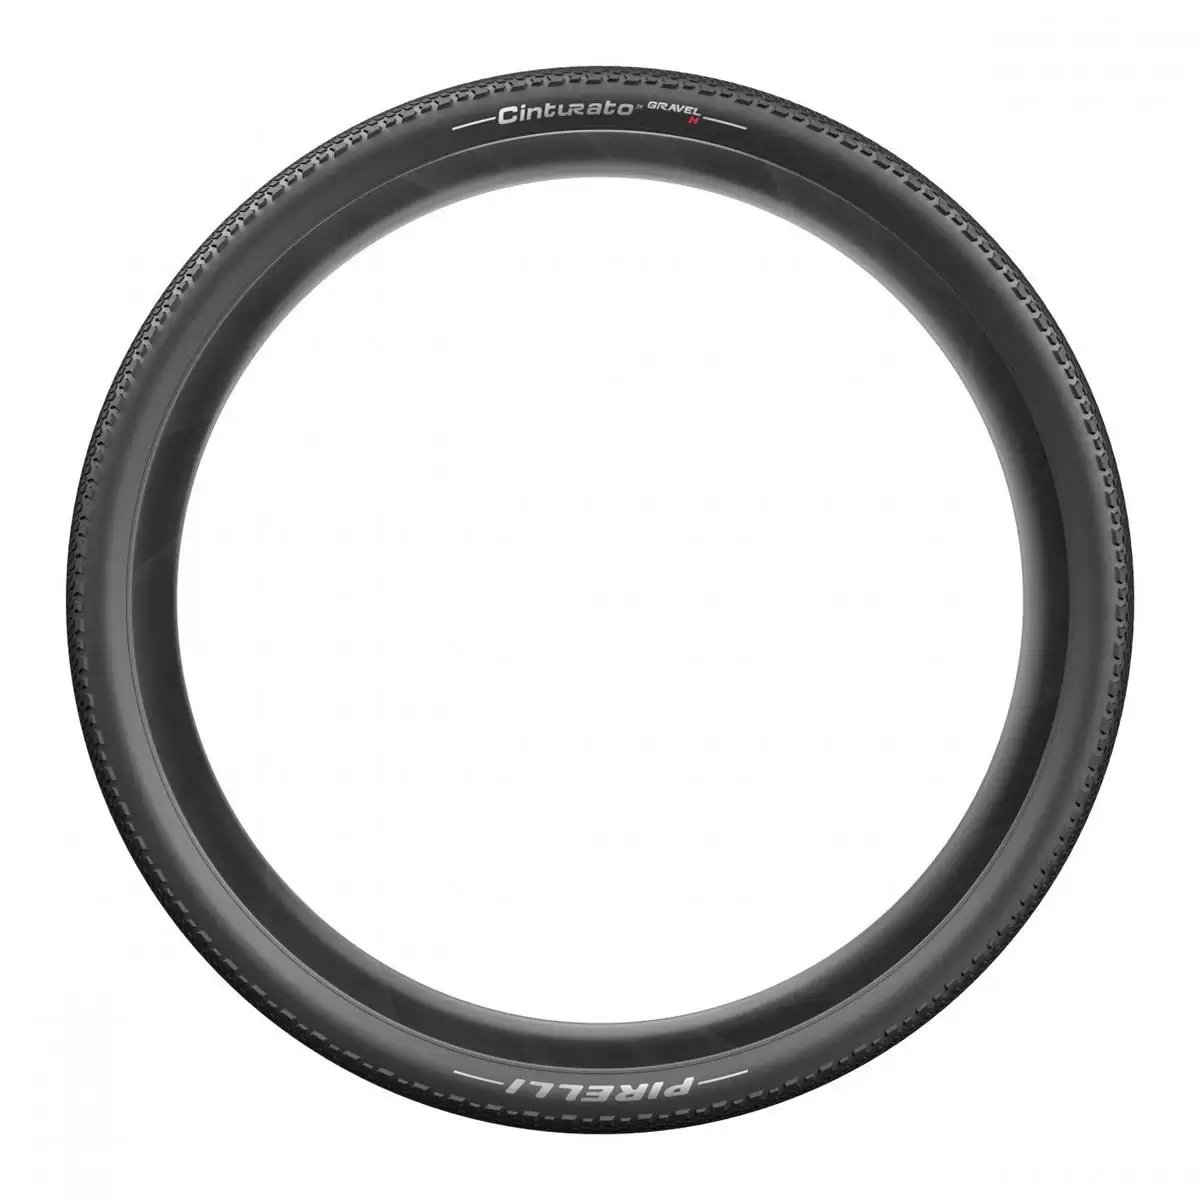 Tire Cinturato Gravel Hard Terrain 650x45c Tubeless Ready Black #3